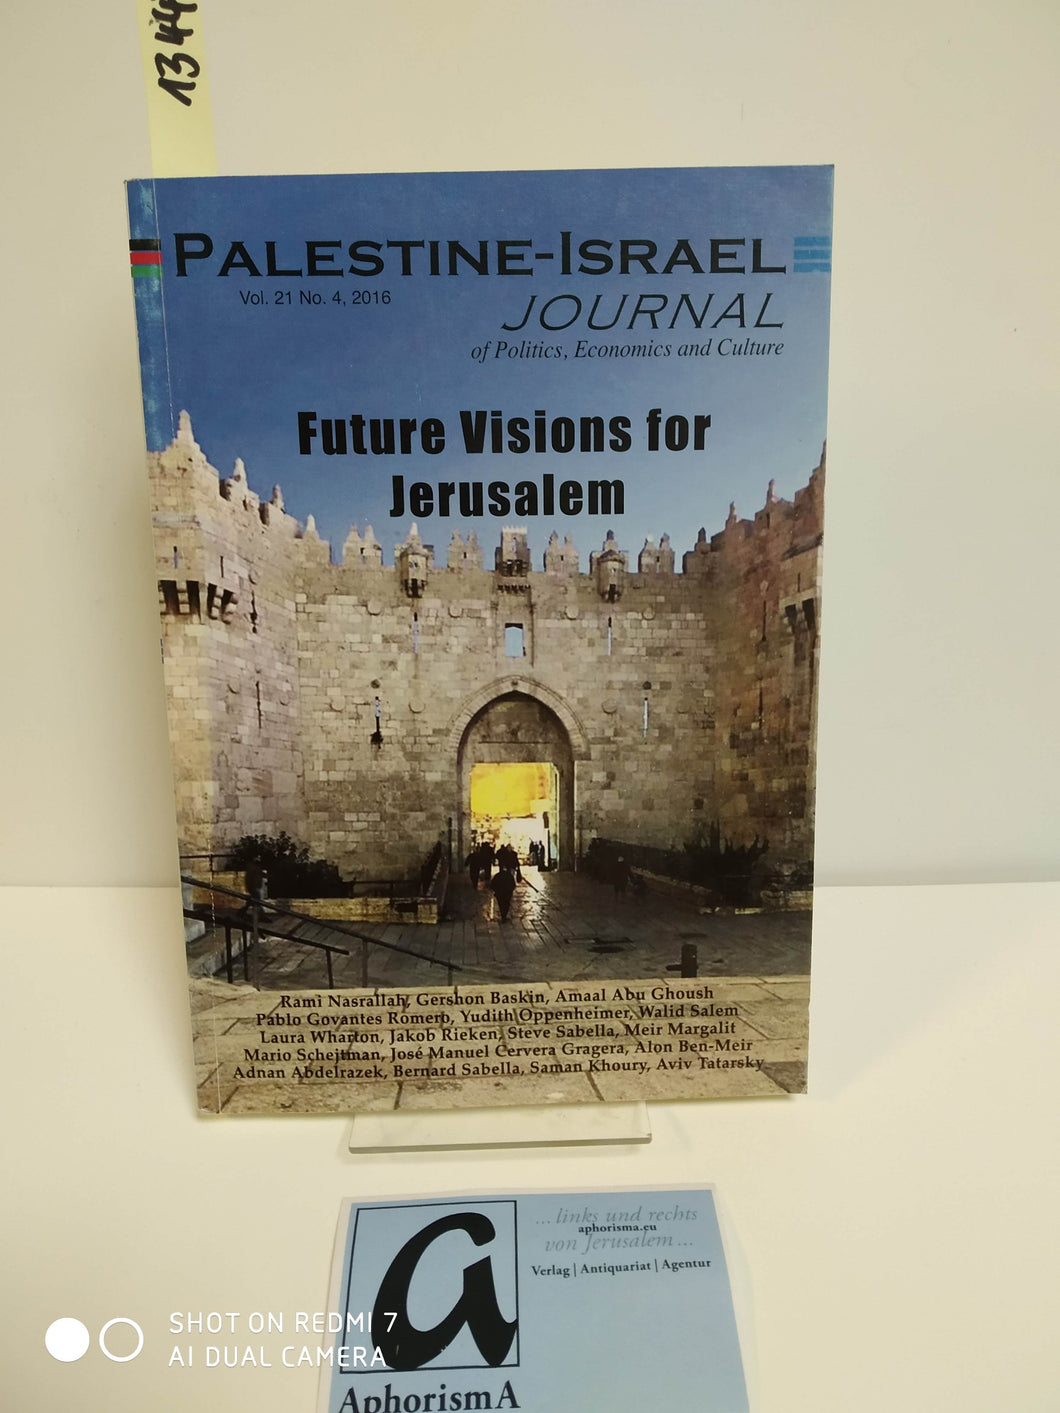 Future Visions for Jerusalem